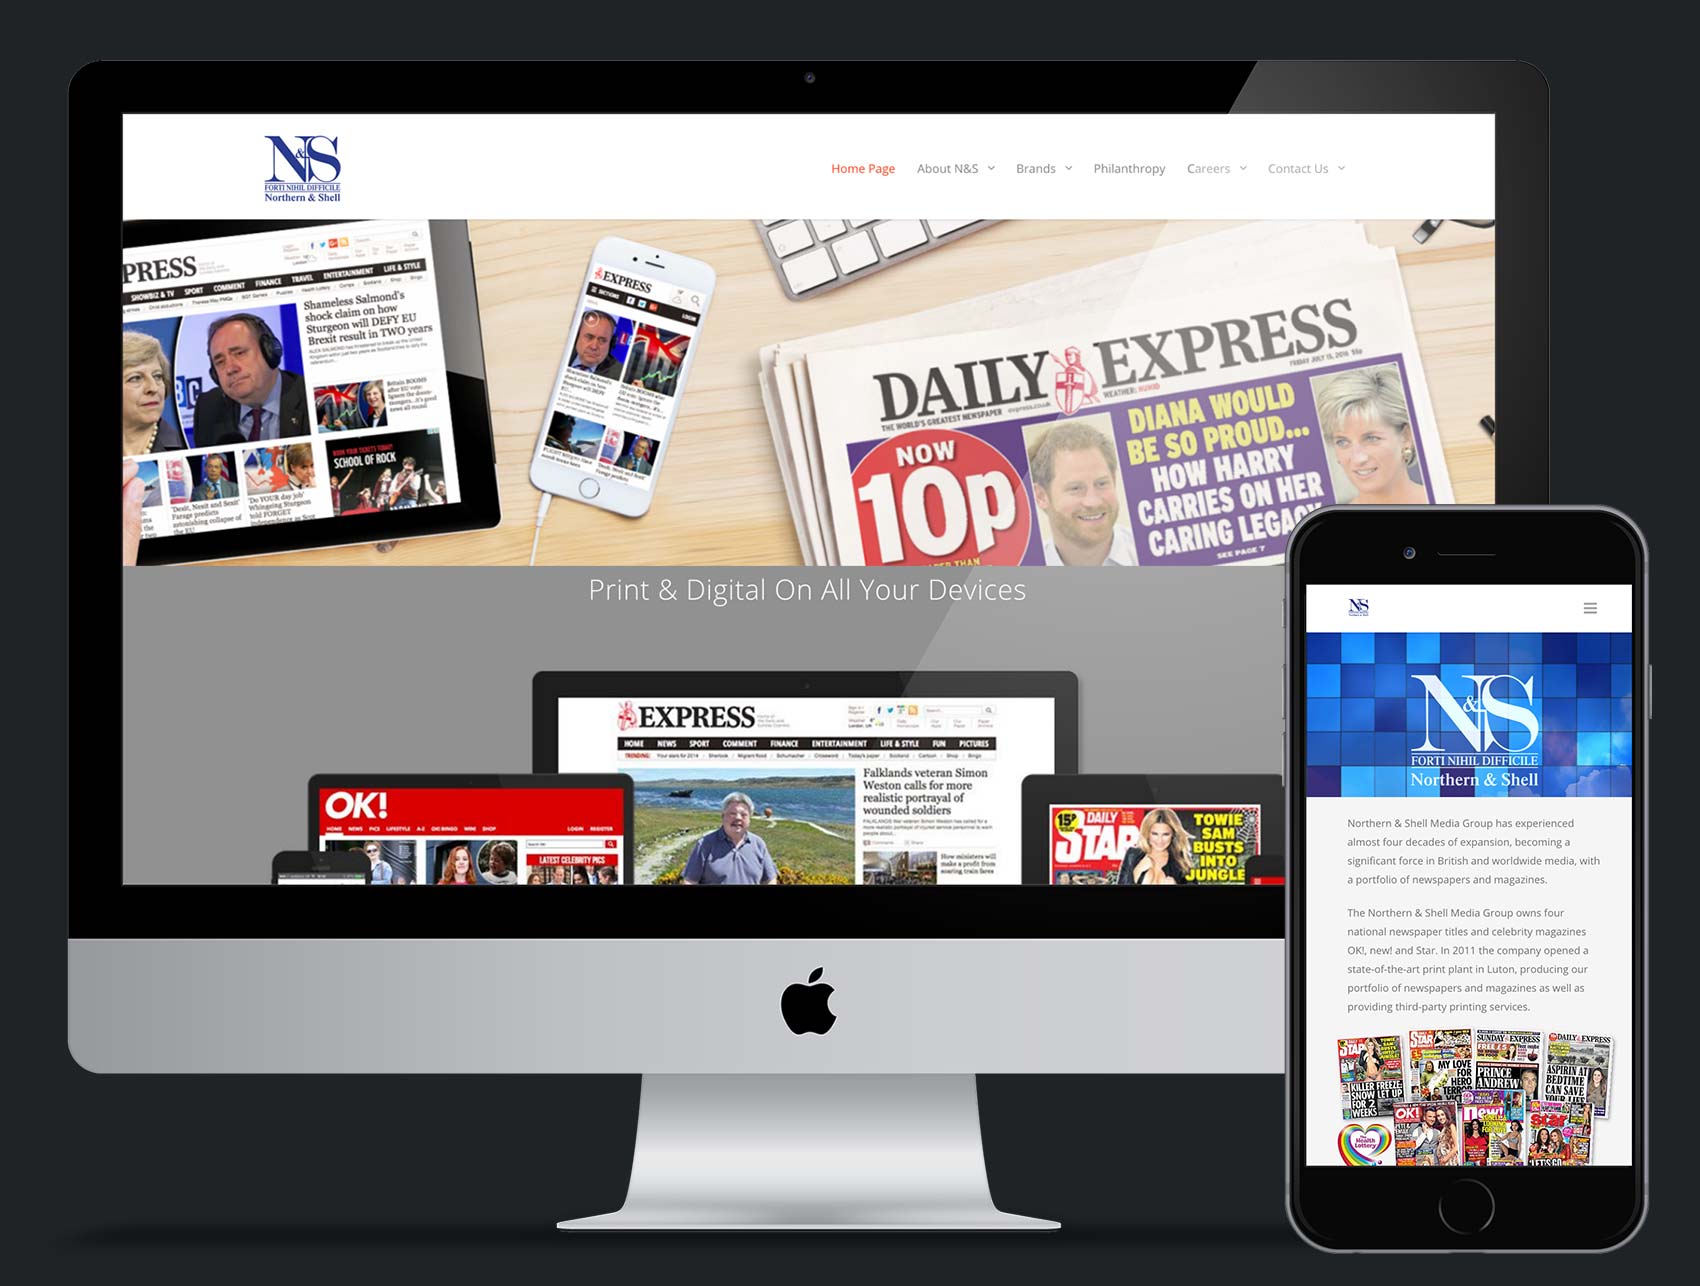 Northern & Shell website design and build using Wordpress platform